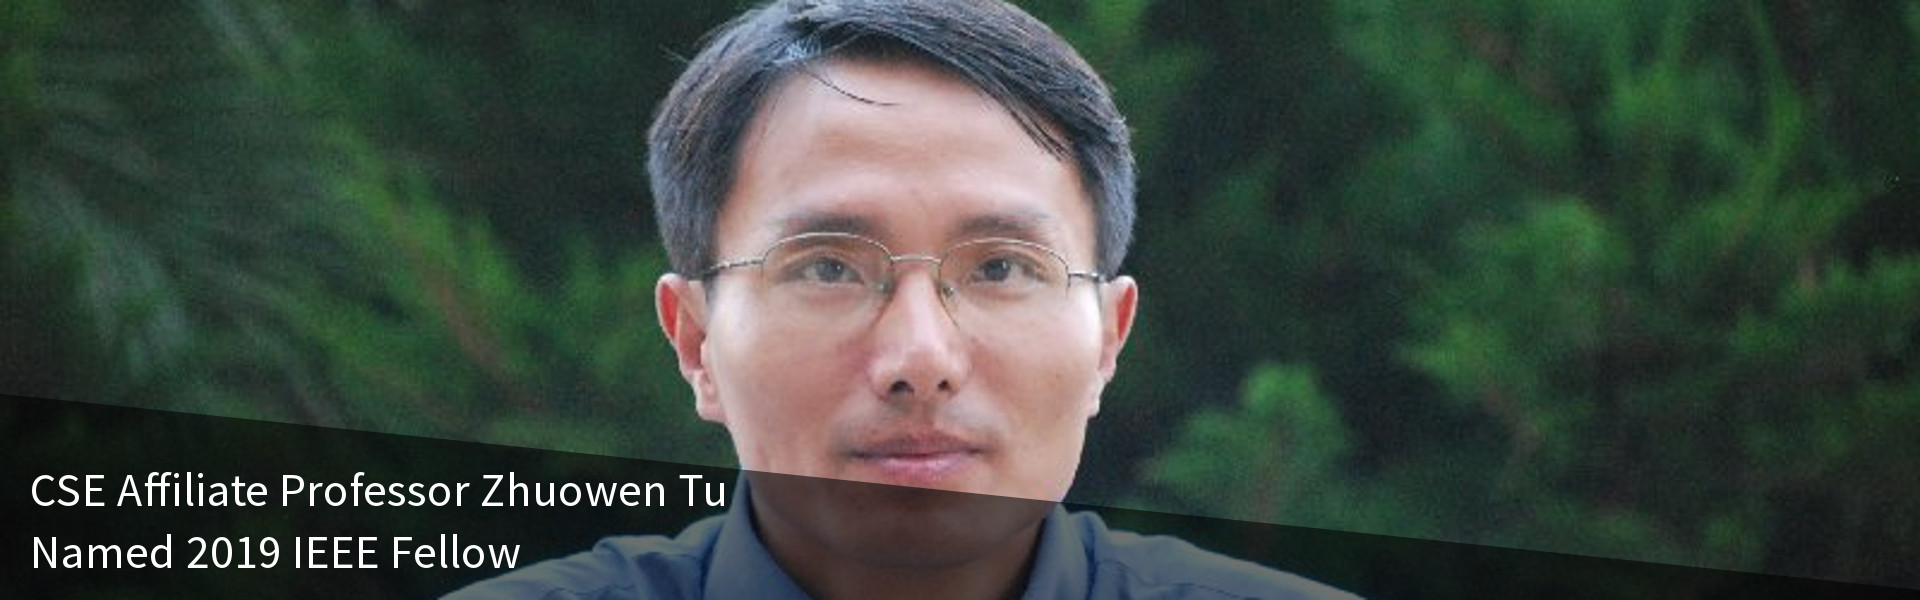 CSE Affiliate Professor Zhuowen Tu Named 2019 IEEE Fellow